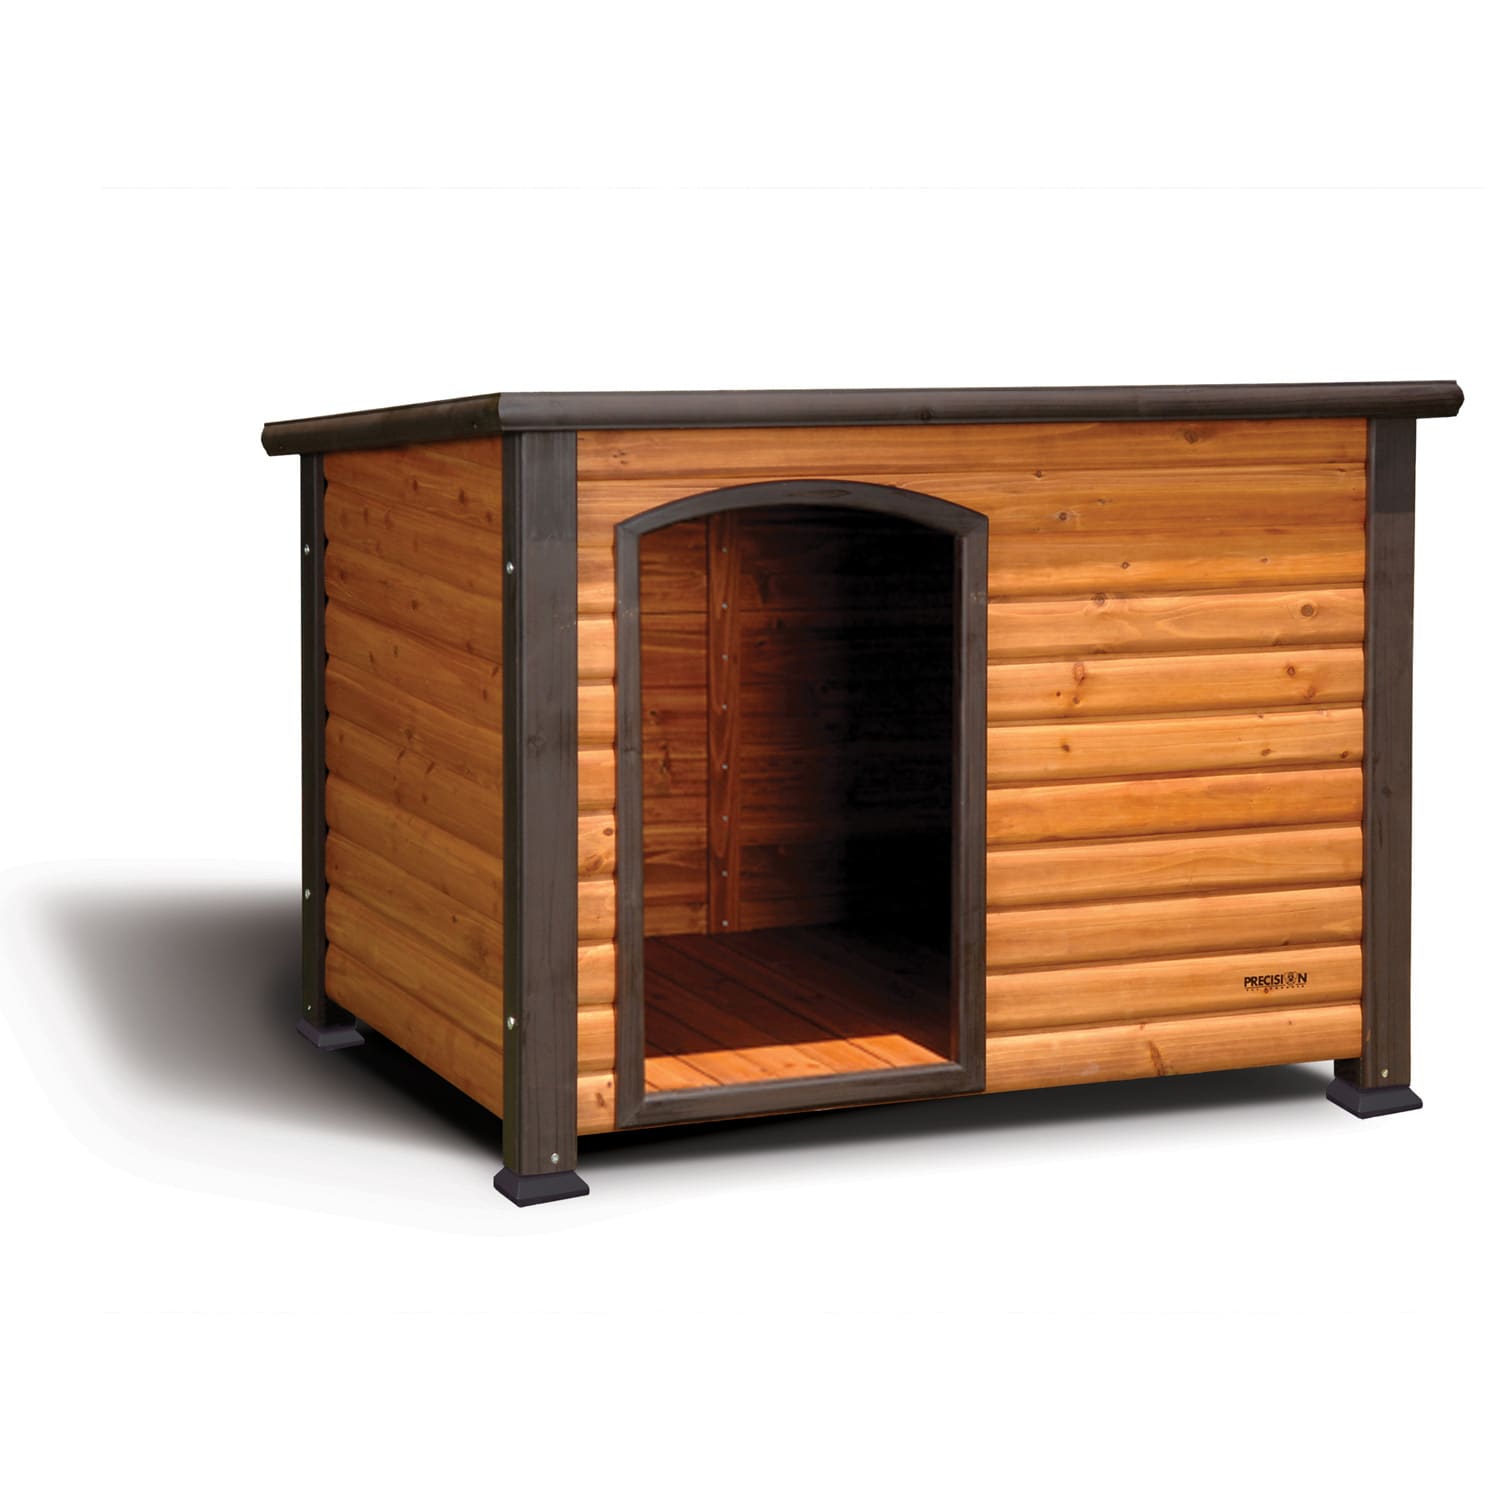 precision pet extreme log cabin dog house